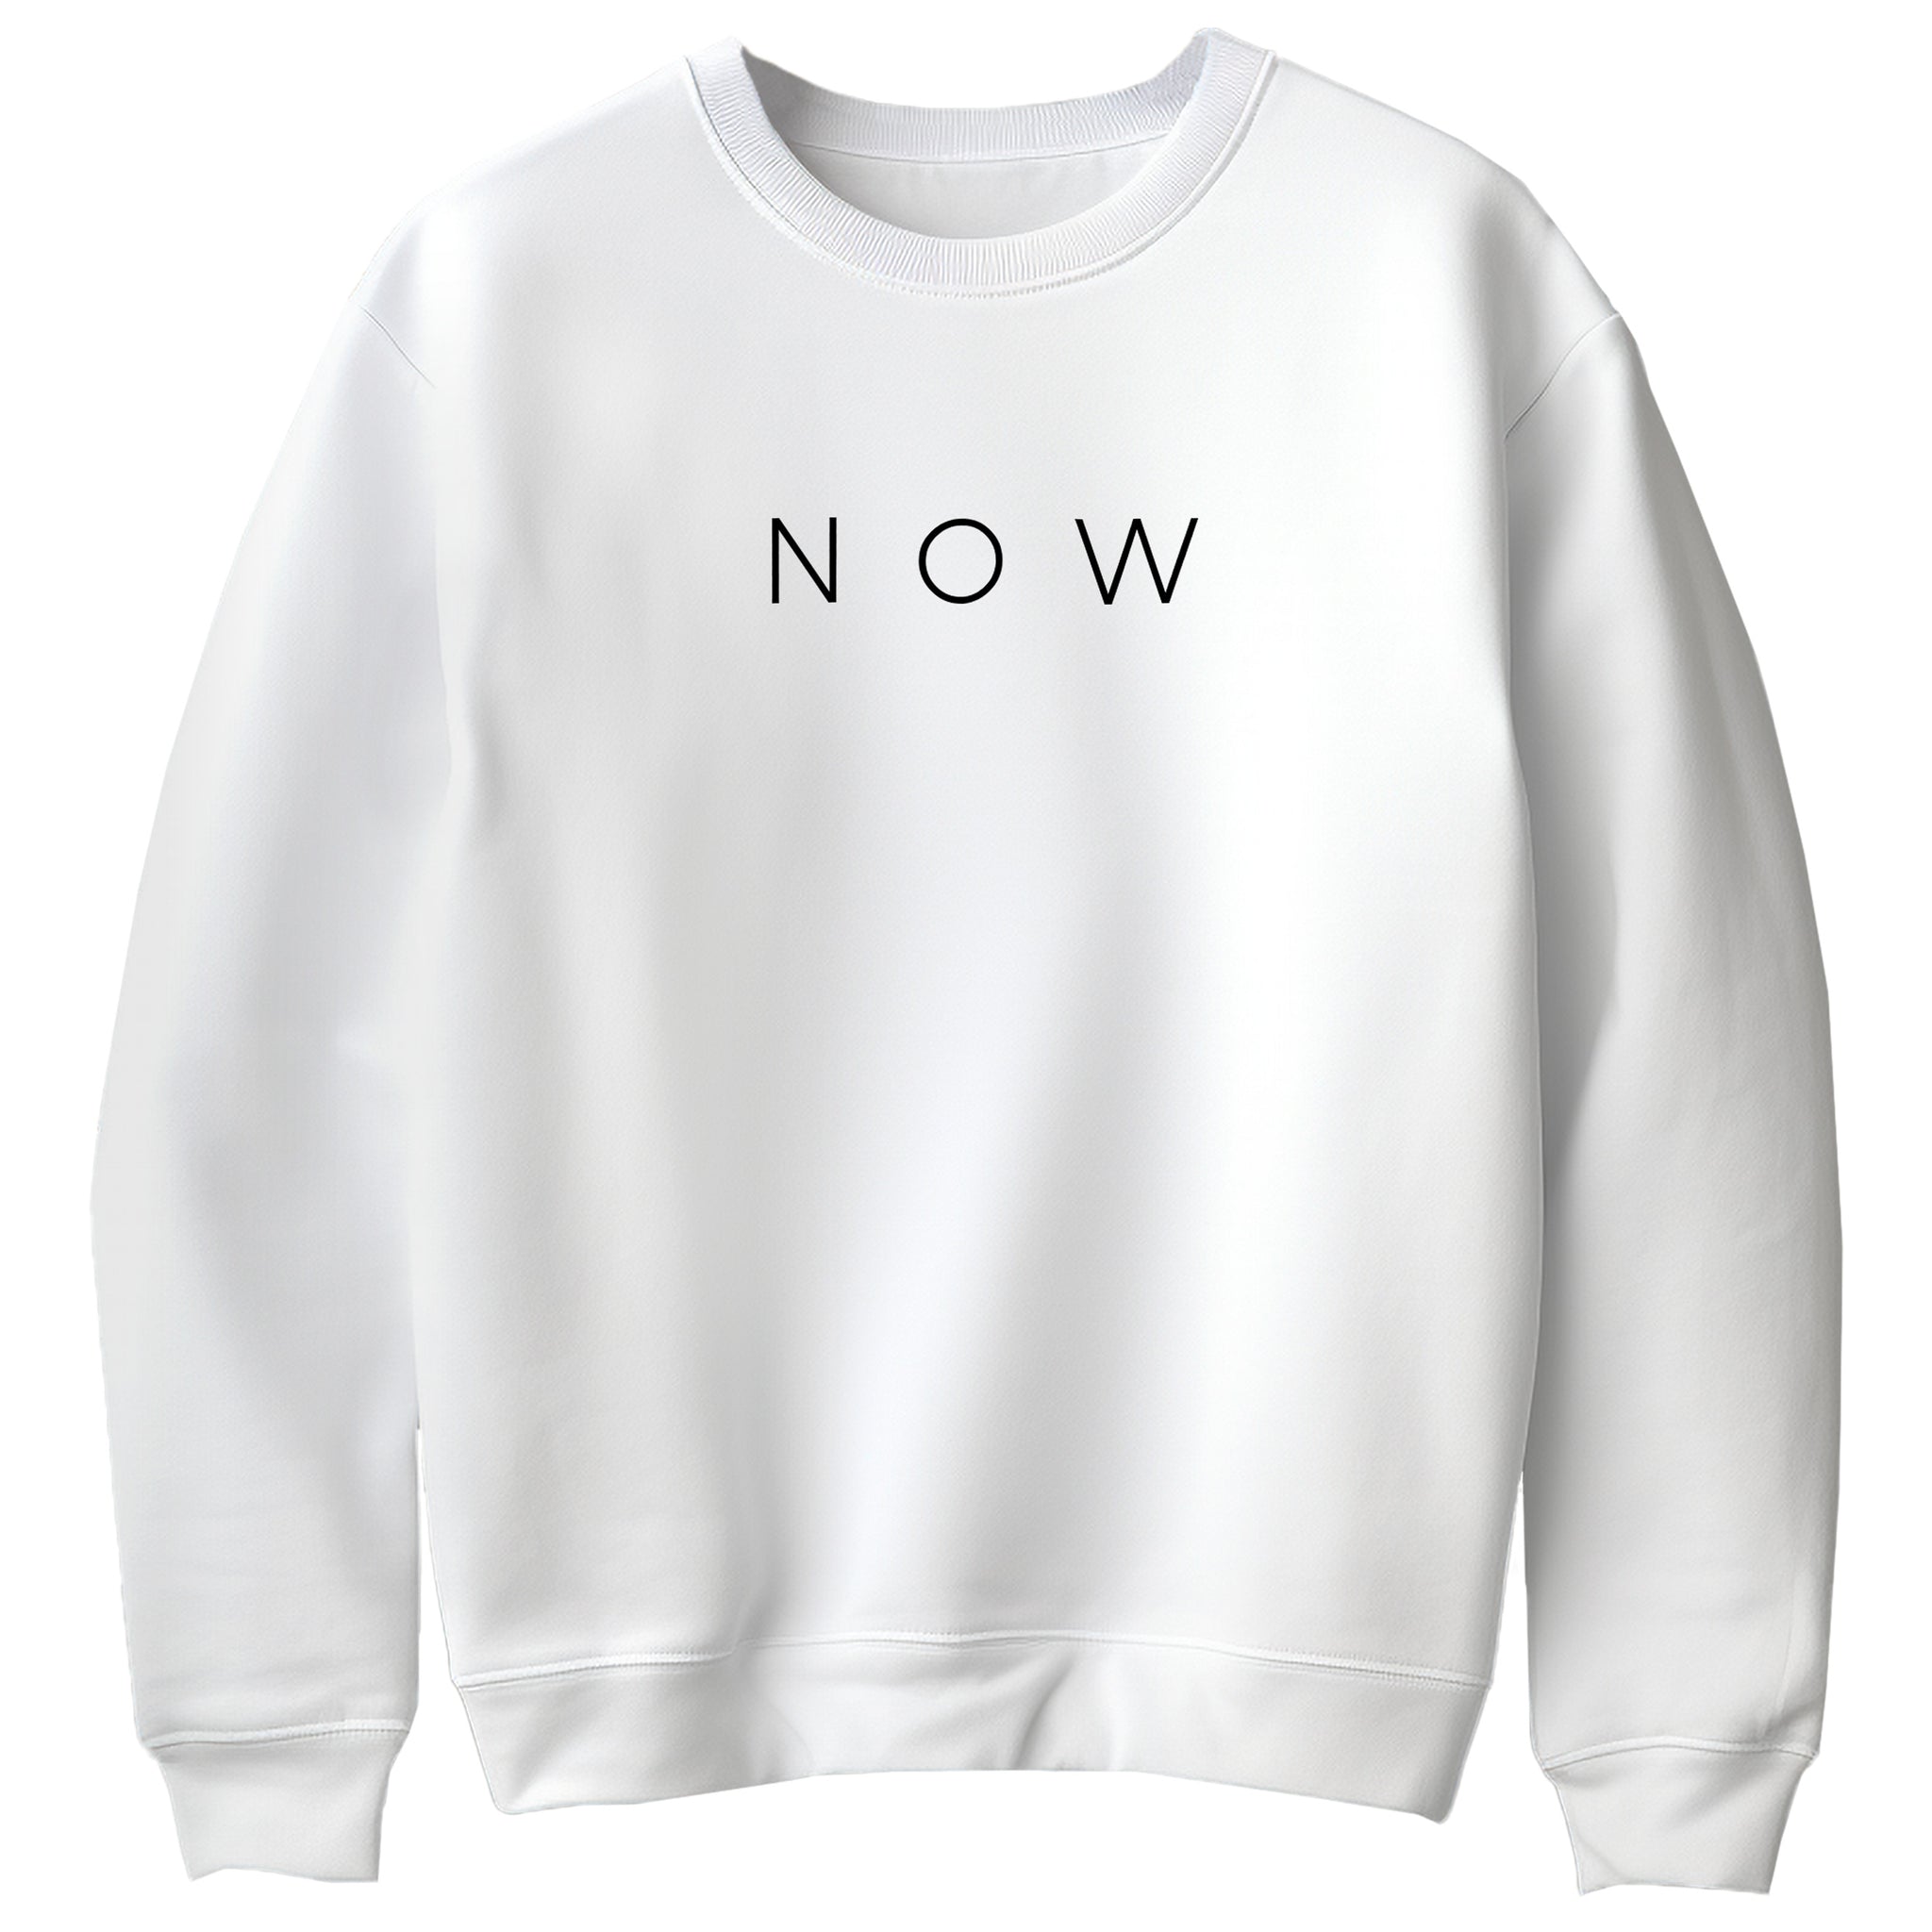 NOW Sweatshirt